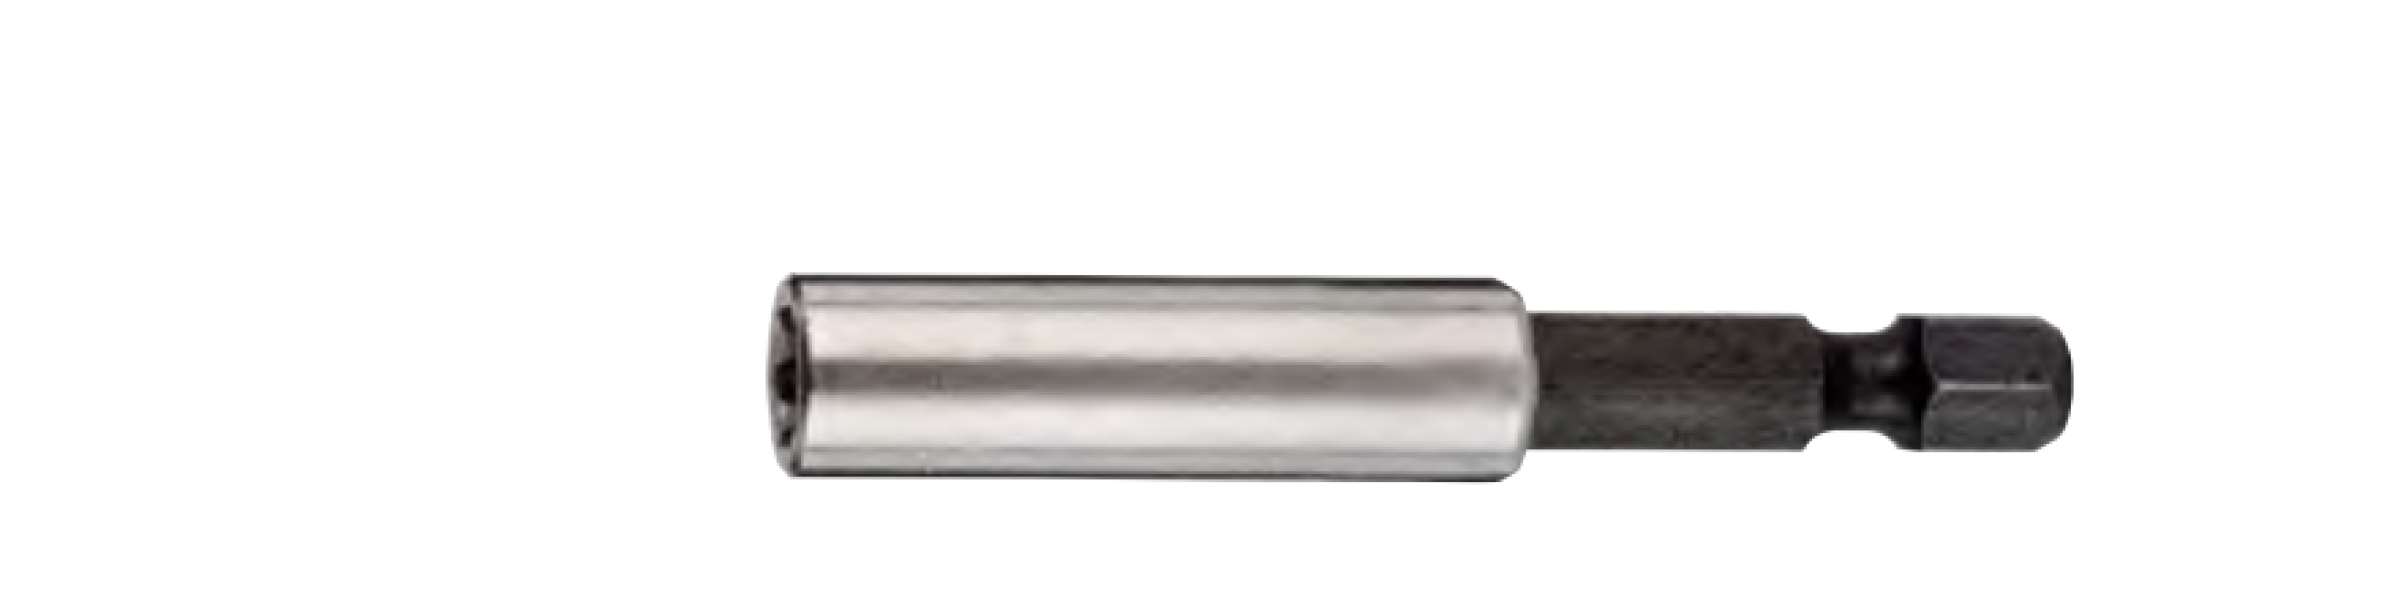 Portapunte magnetico Einhell esagonale da 58mm - 49100800 01